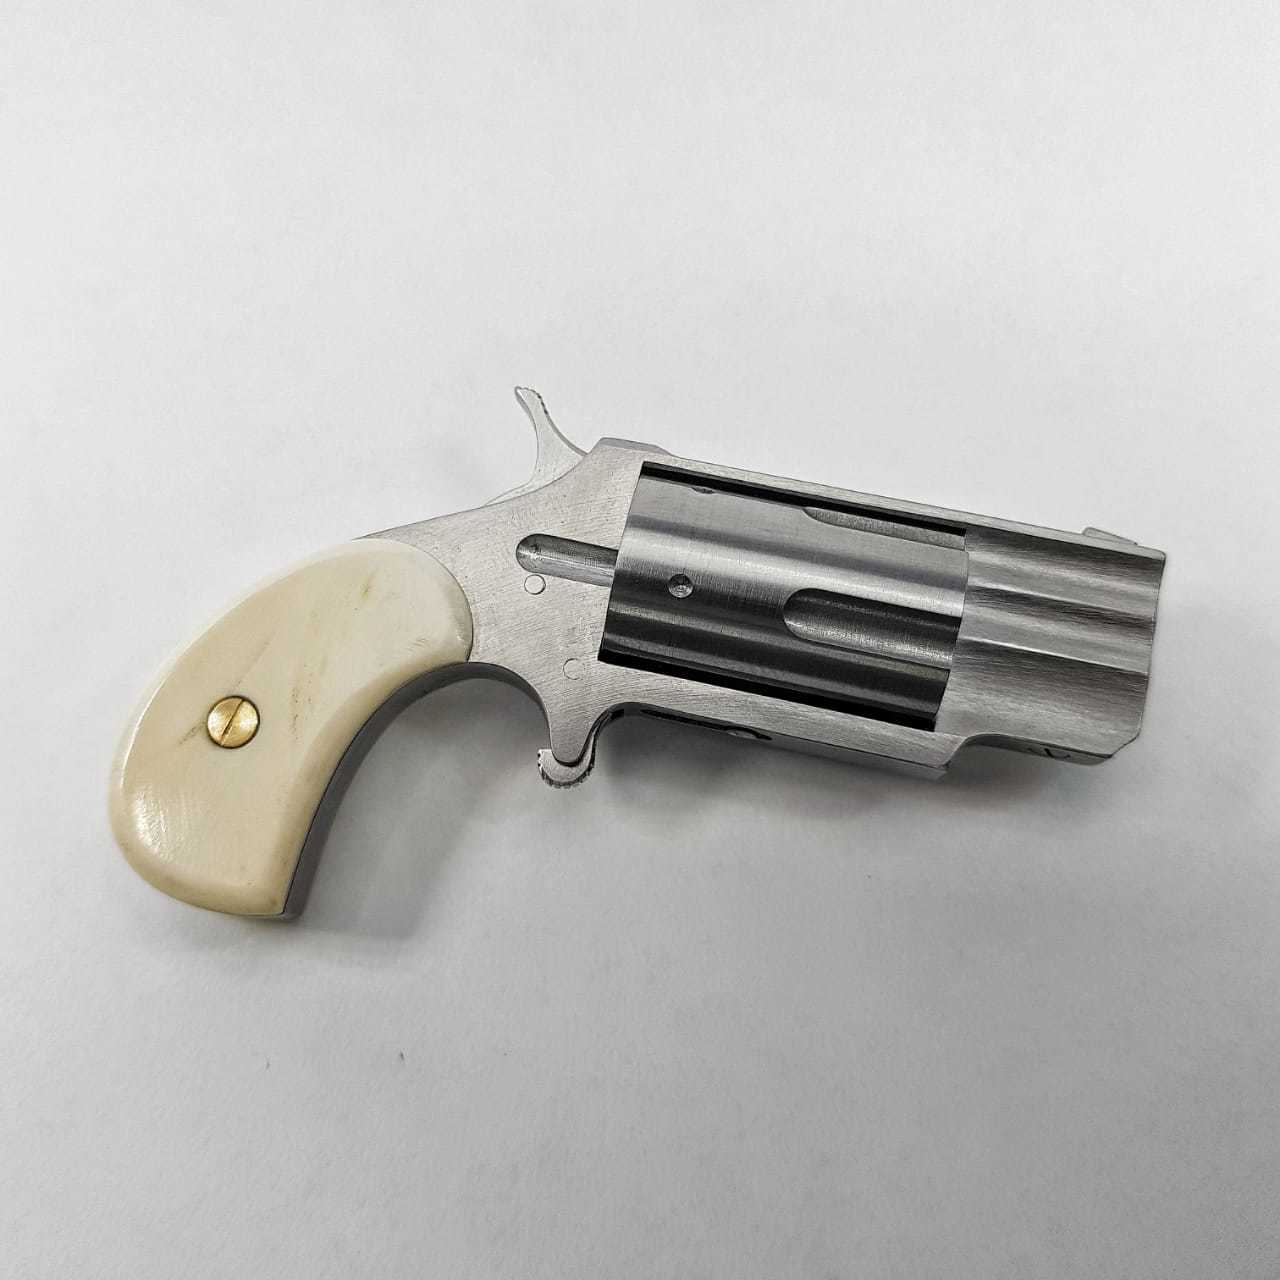 2,5mm NAA PUG revolver